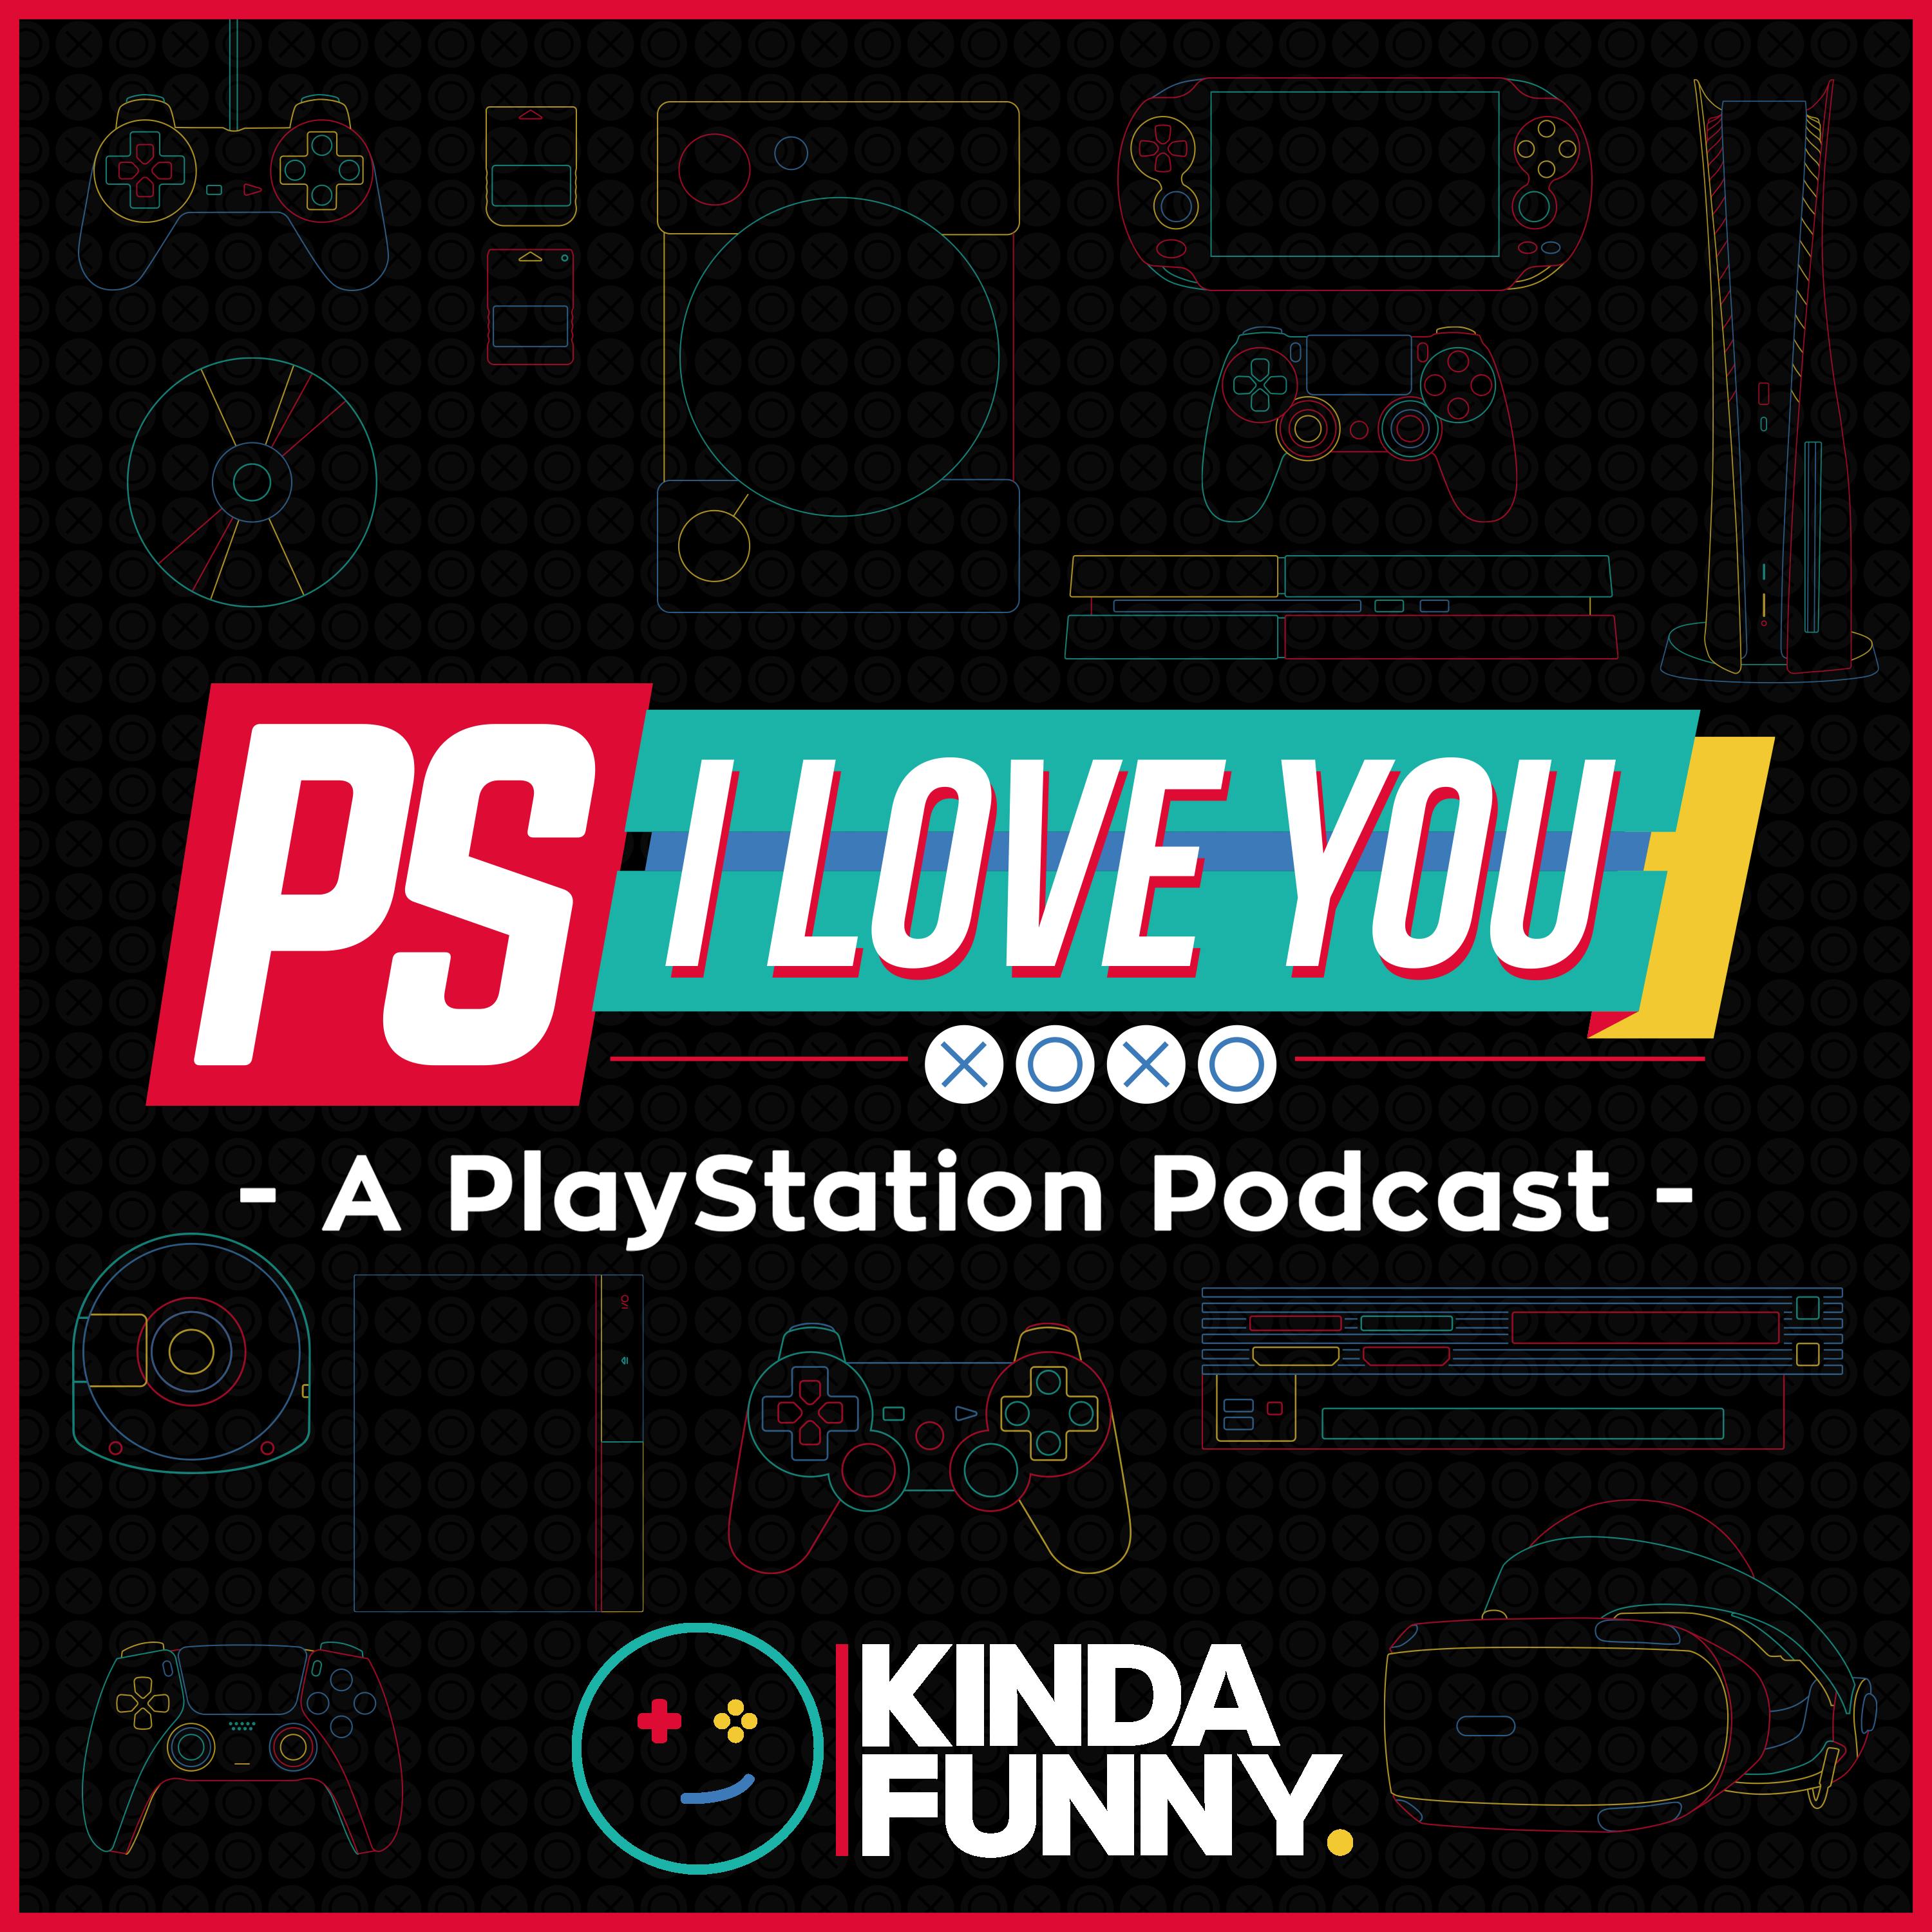 Kinda Funny Games Daily: Video Games News Podcast - Kinda Funny